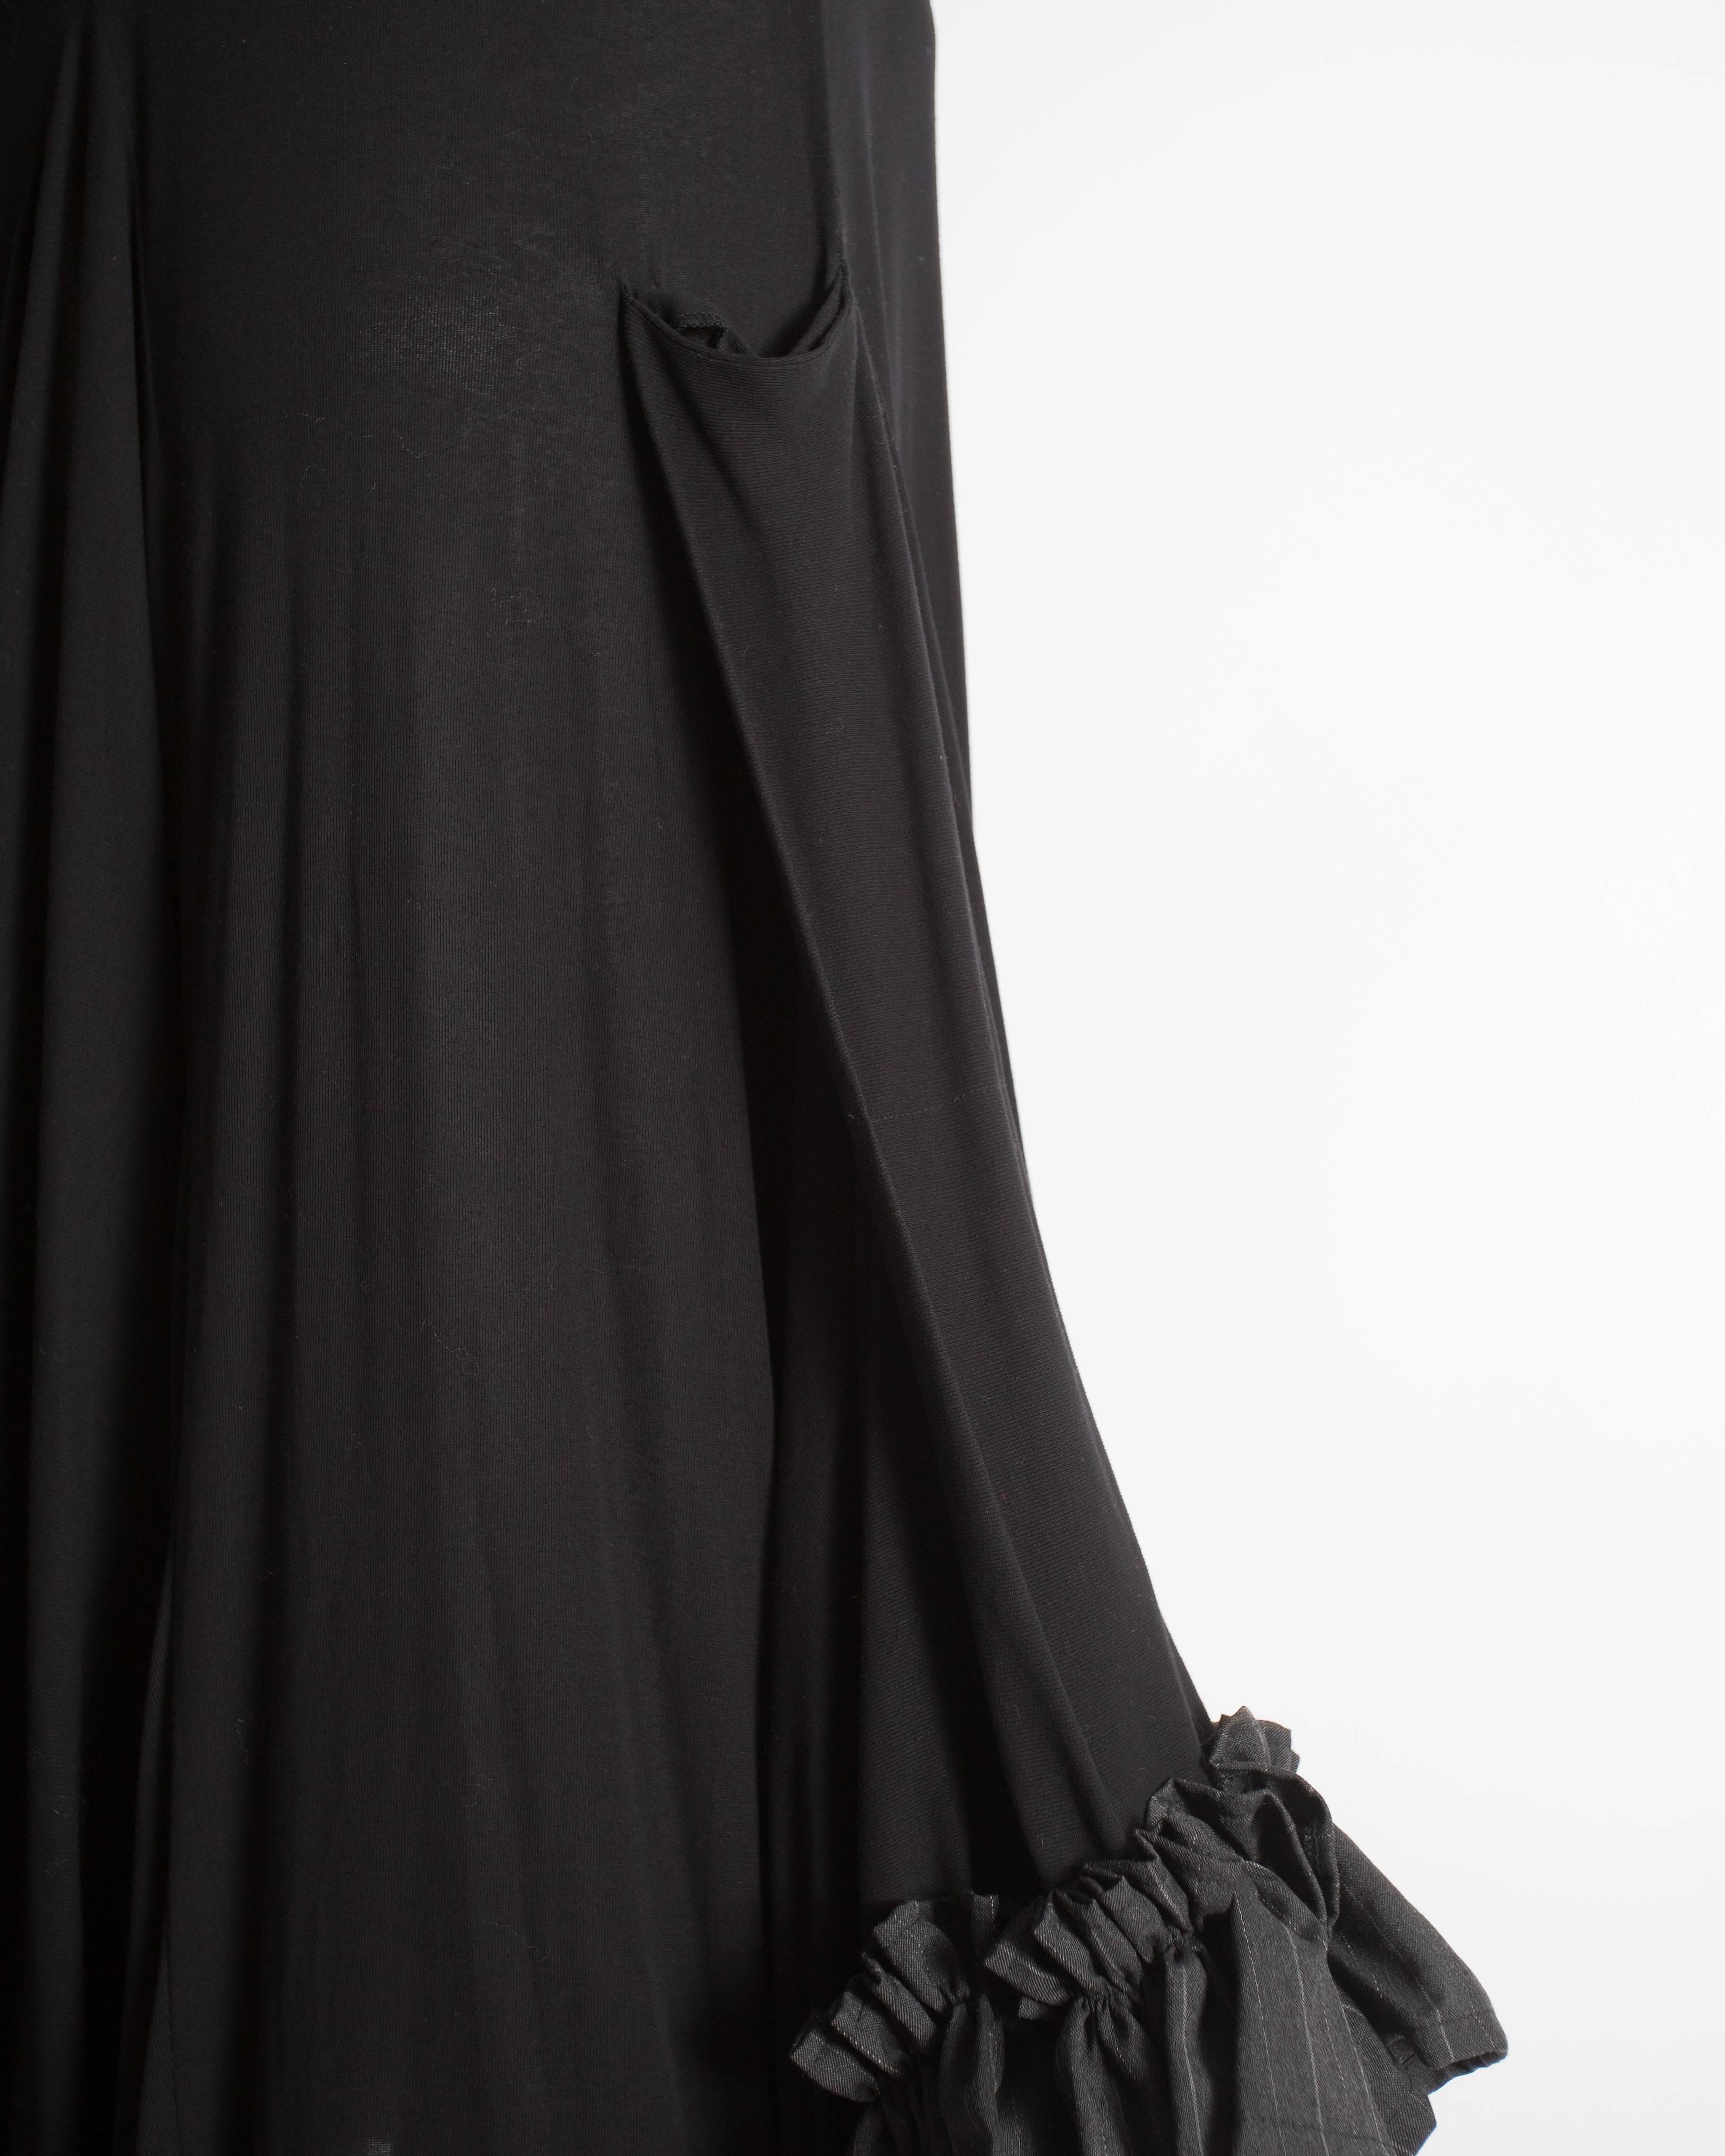 Yohji Yamamoto black ruffled swing dress, circa 1999 4